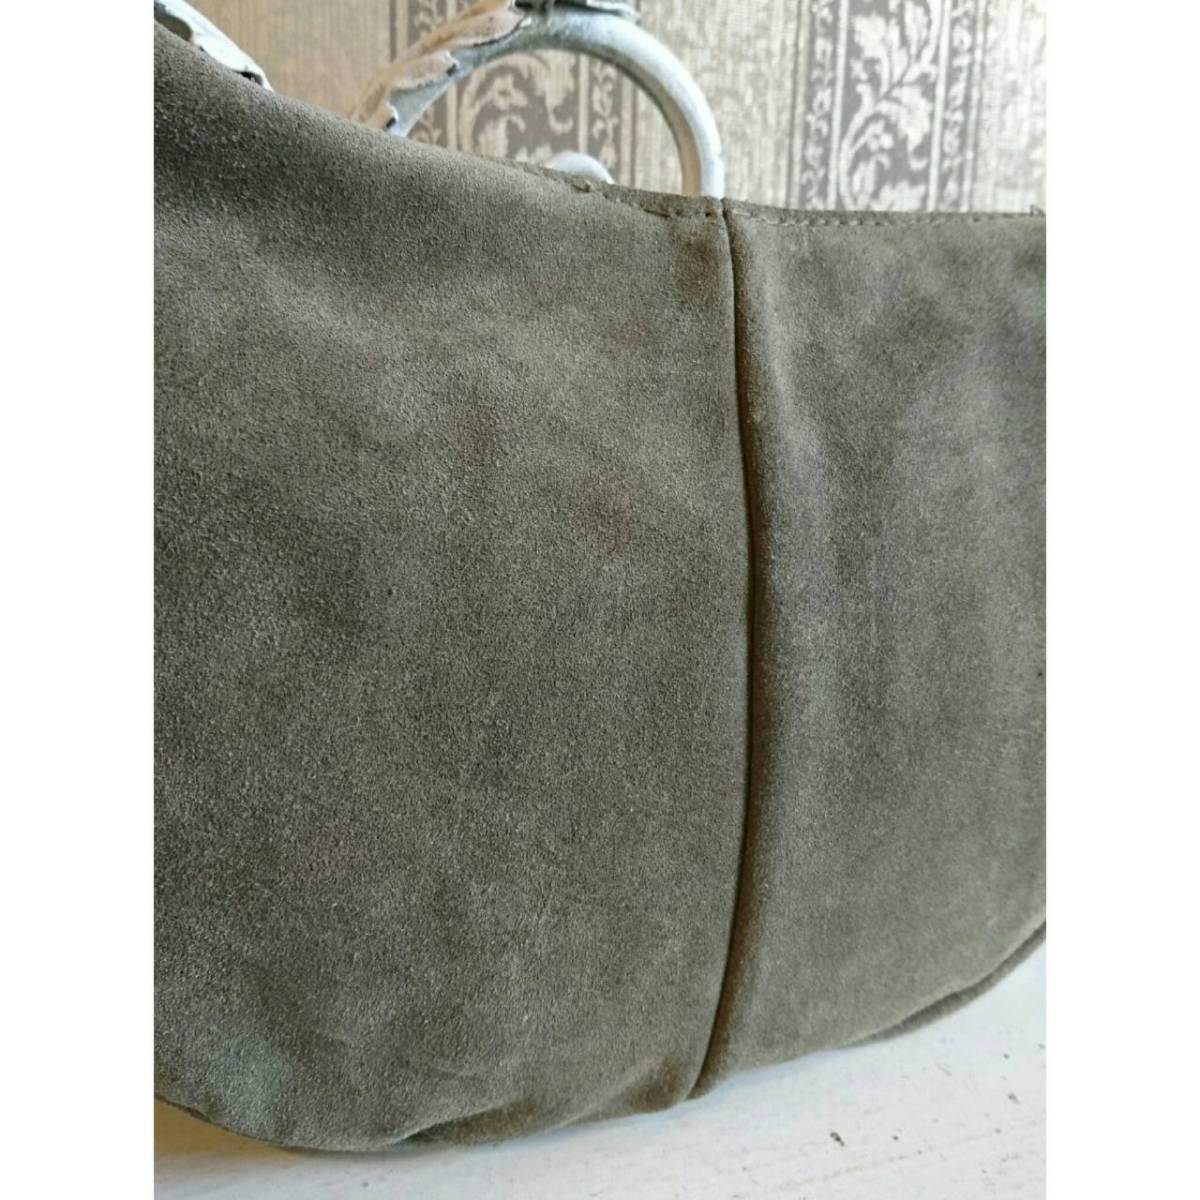  Europe Vintage тирольский сумка замша сумка сумка на плечо chiroruvintage б/у одежда suede bag хаки зеленый LV157